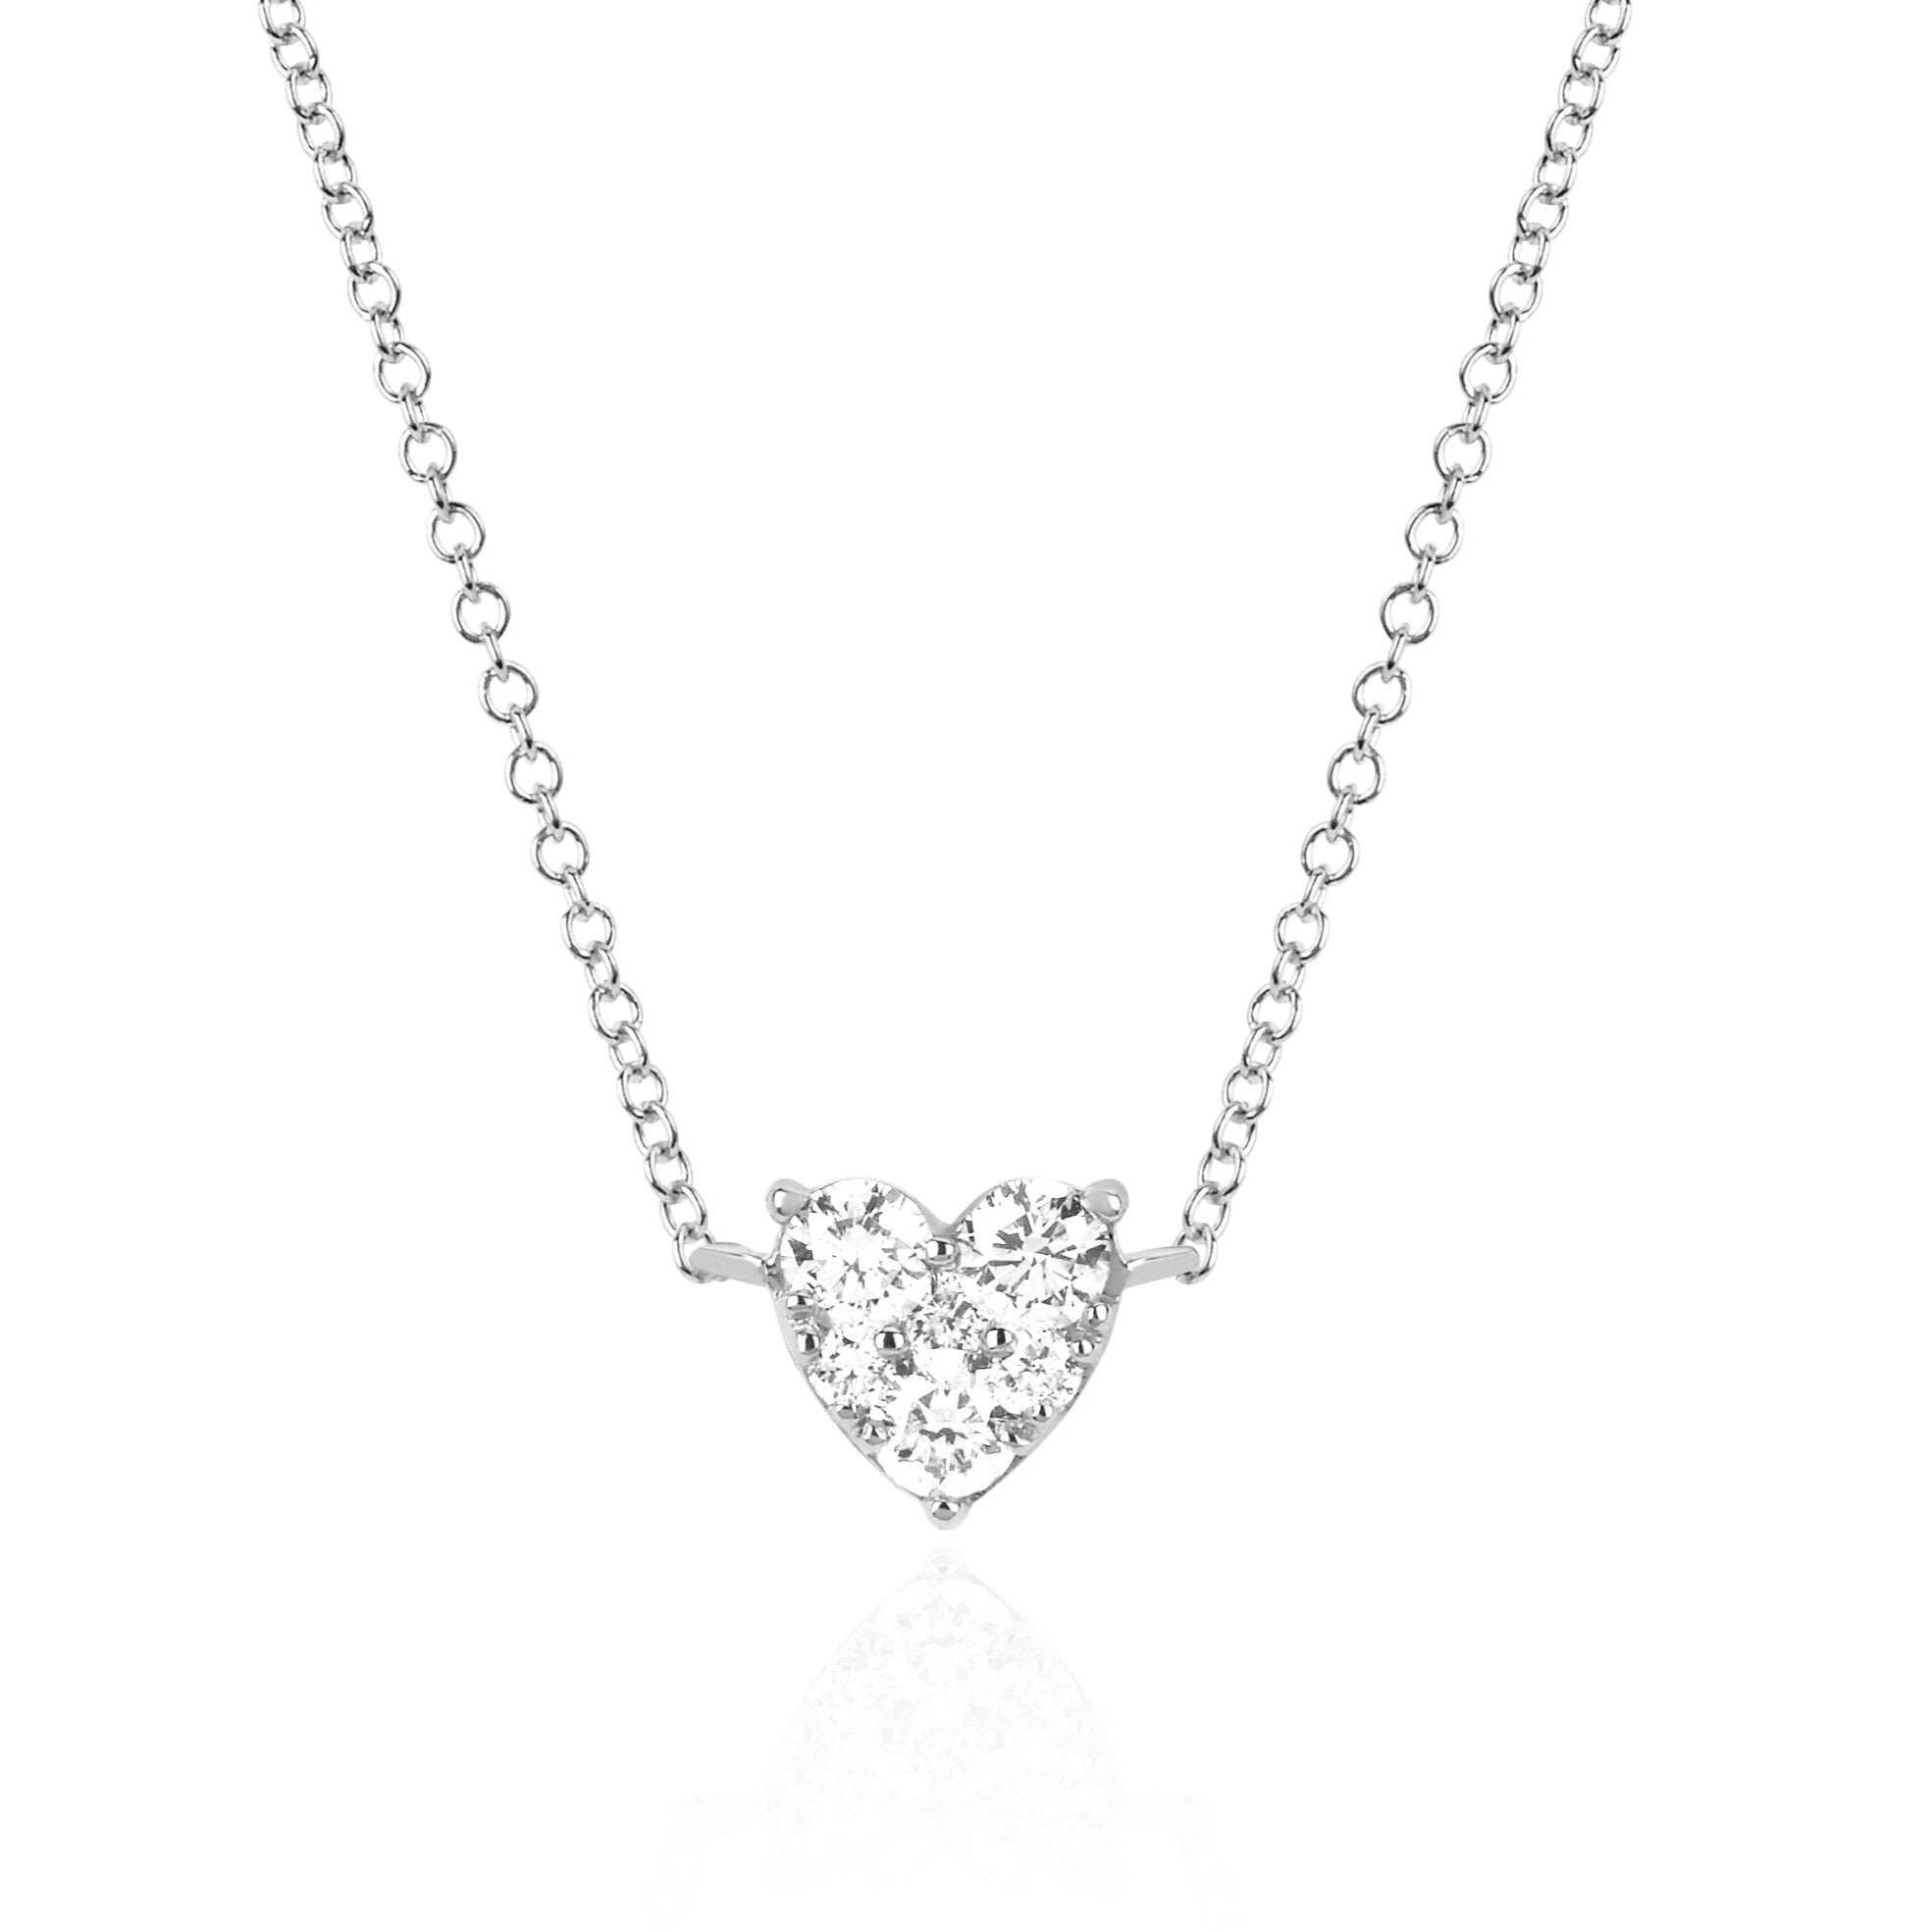 Full Cut Diamond Heart Choker Necklace in 14k White Gold